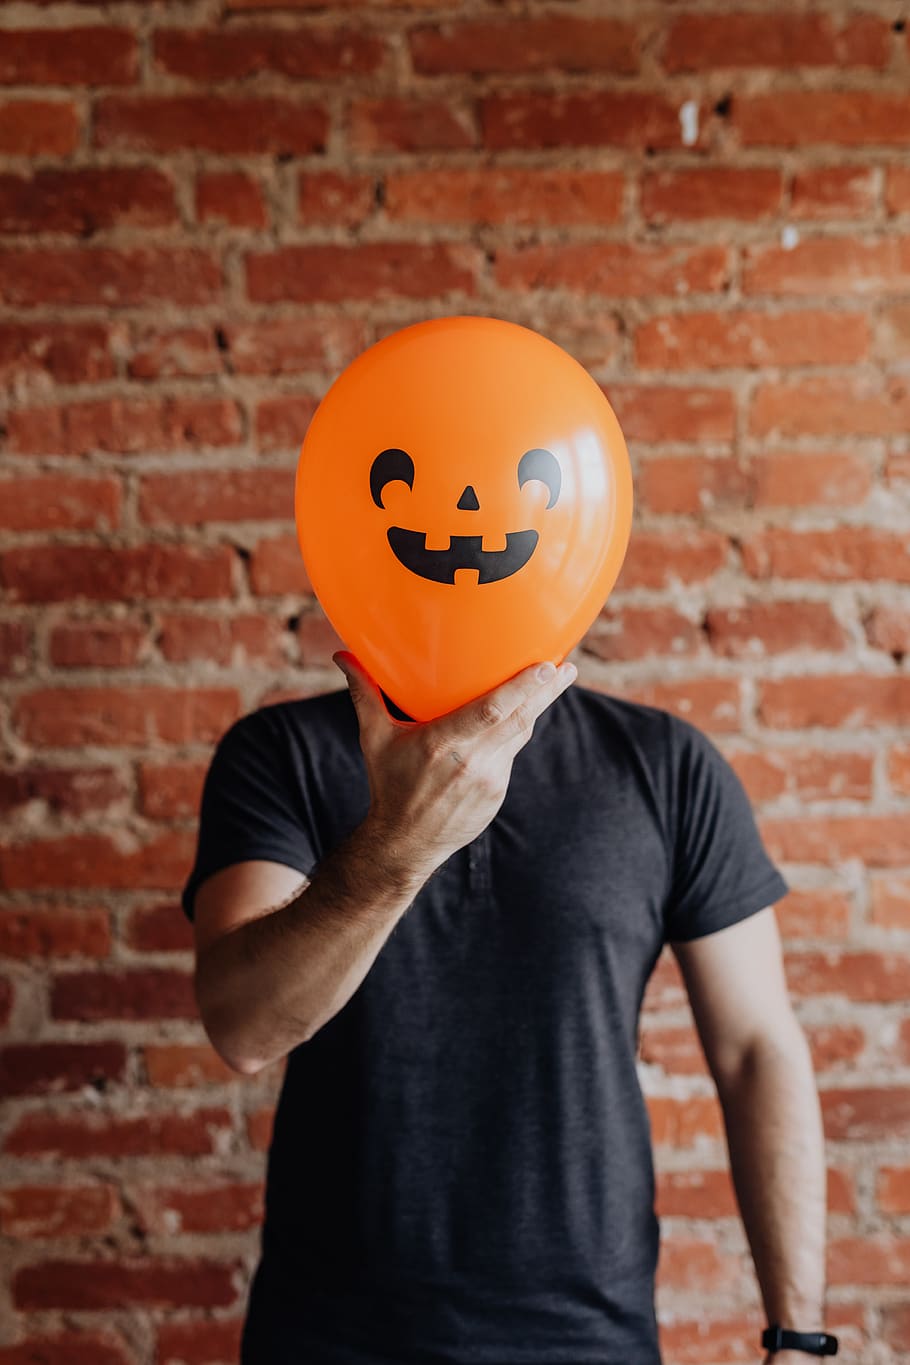 balloon, orange, face, funny, autumn, man, Halloween, one person, brick, wall